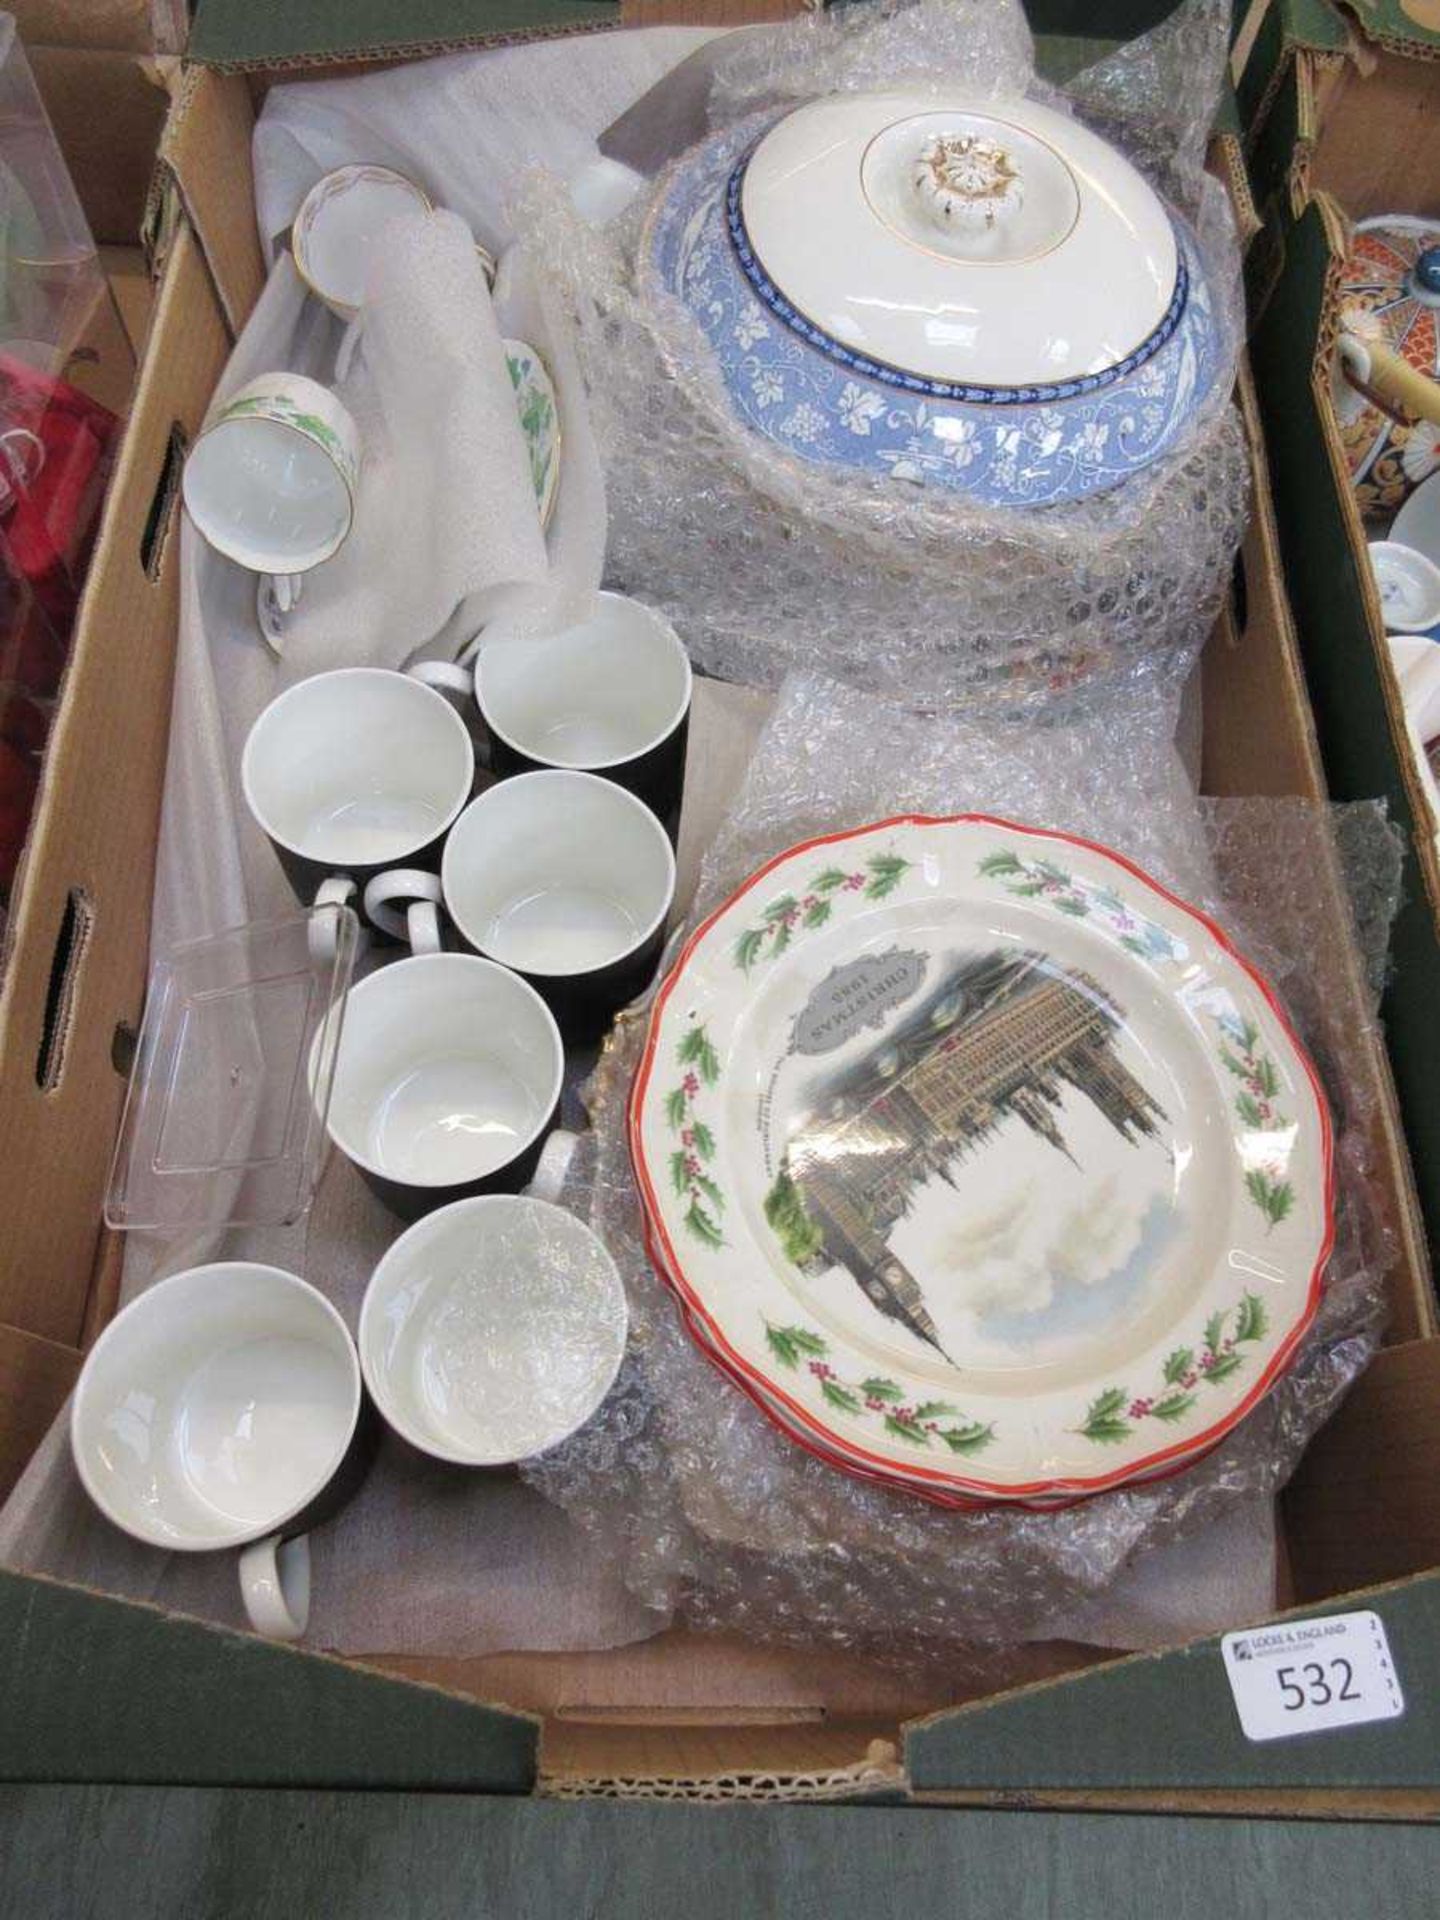 Three trays of ceramic ware to include mugs, tureens, Wedgwood, etc